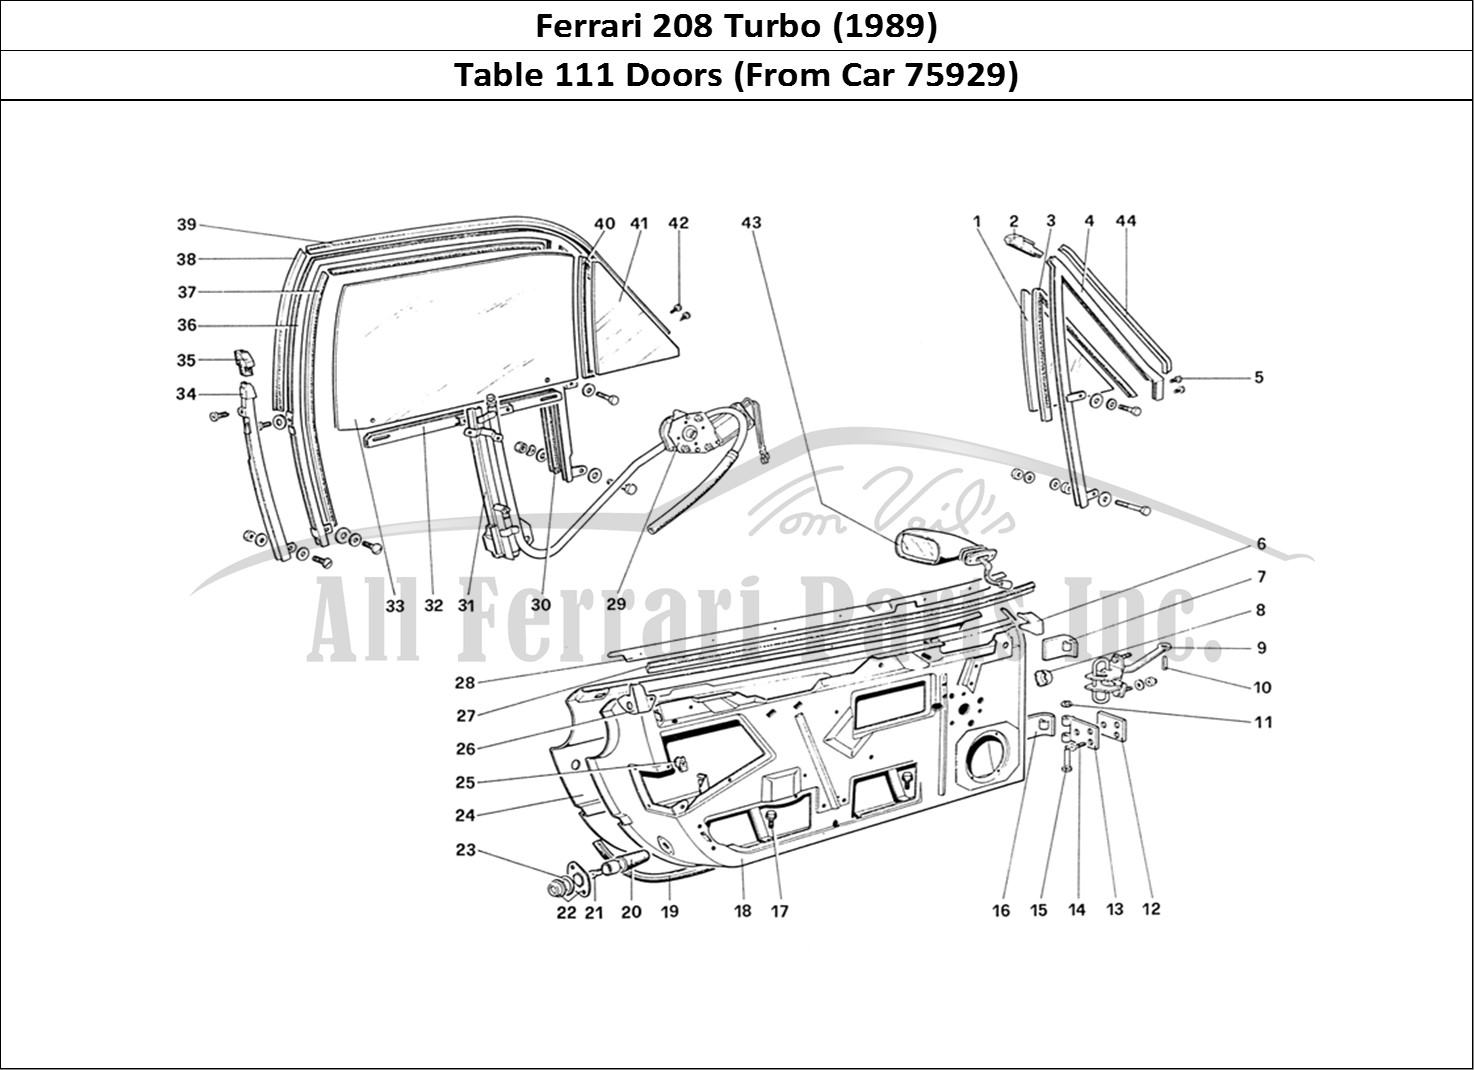 Ferrari Parts Ferrari 208 Turbo (1989) Page 111 Doors (From Car 75929)